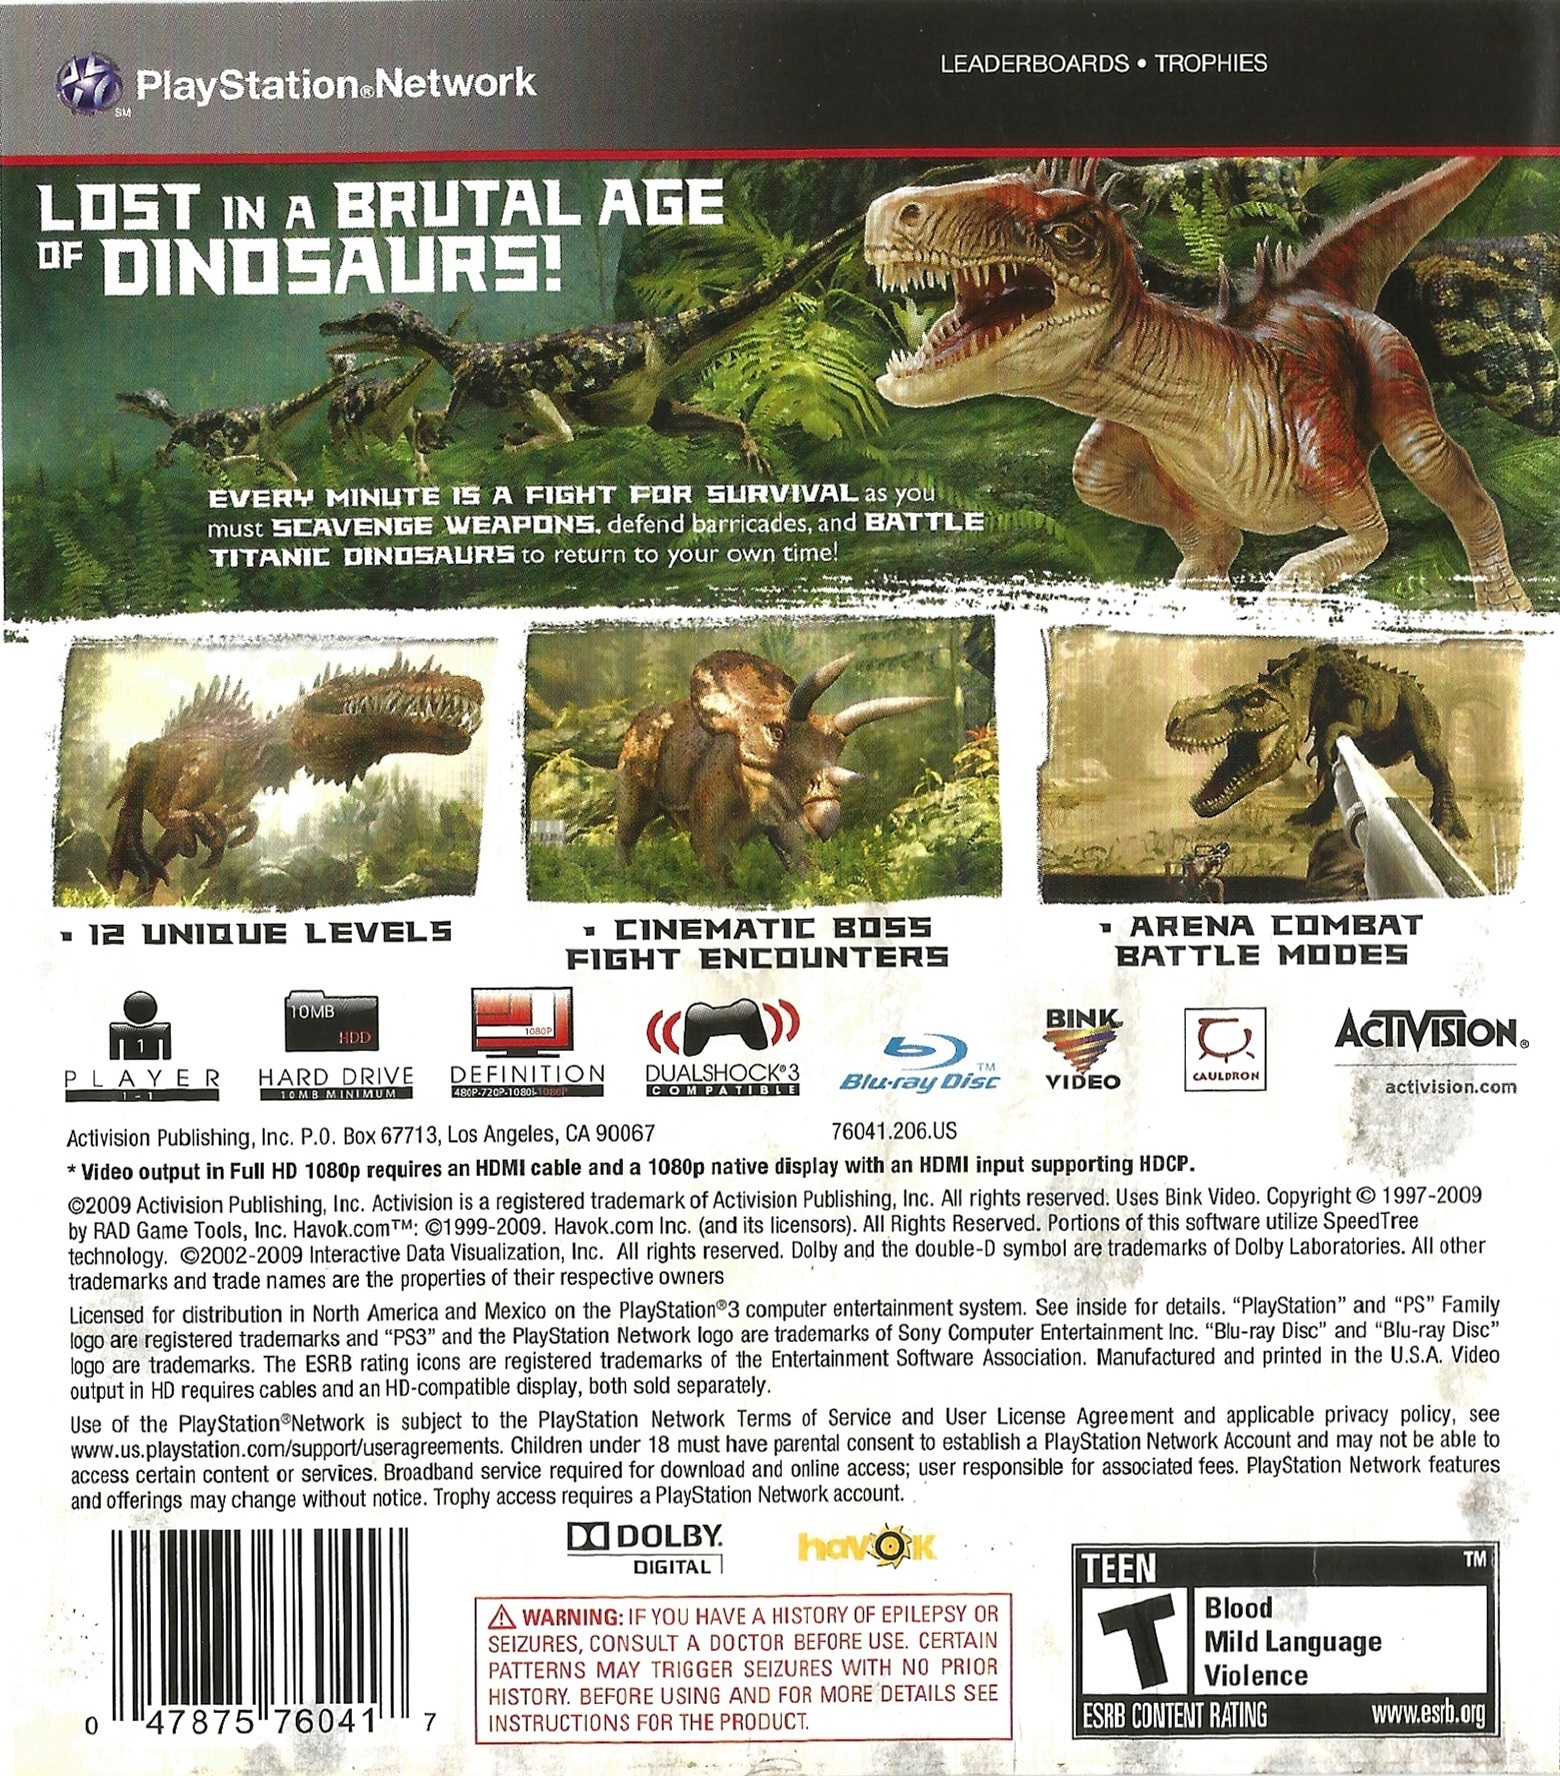 Jurassic the Hunted - Xbox 360, Xbox 360